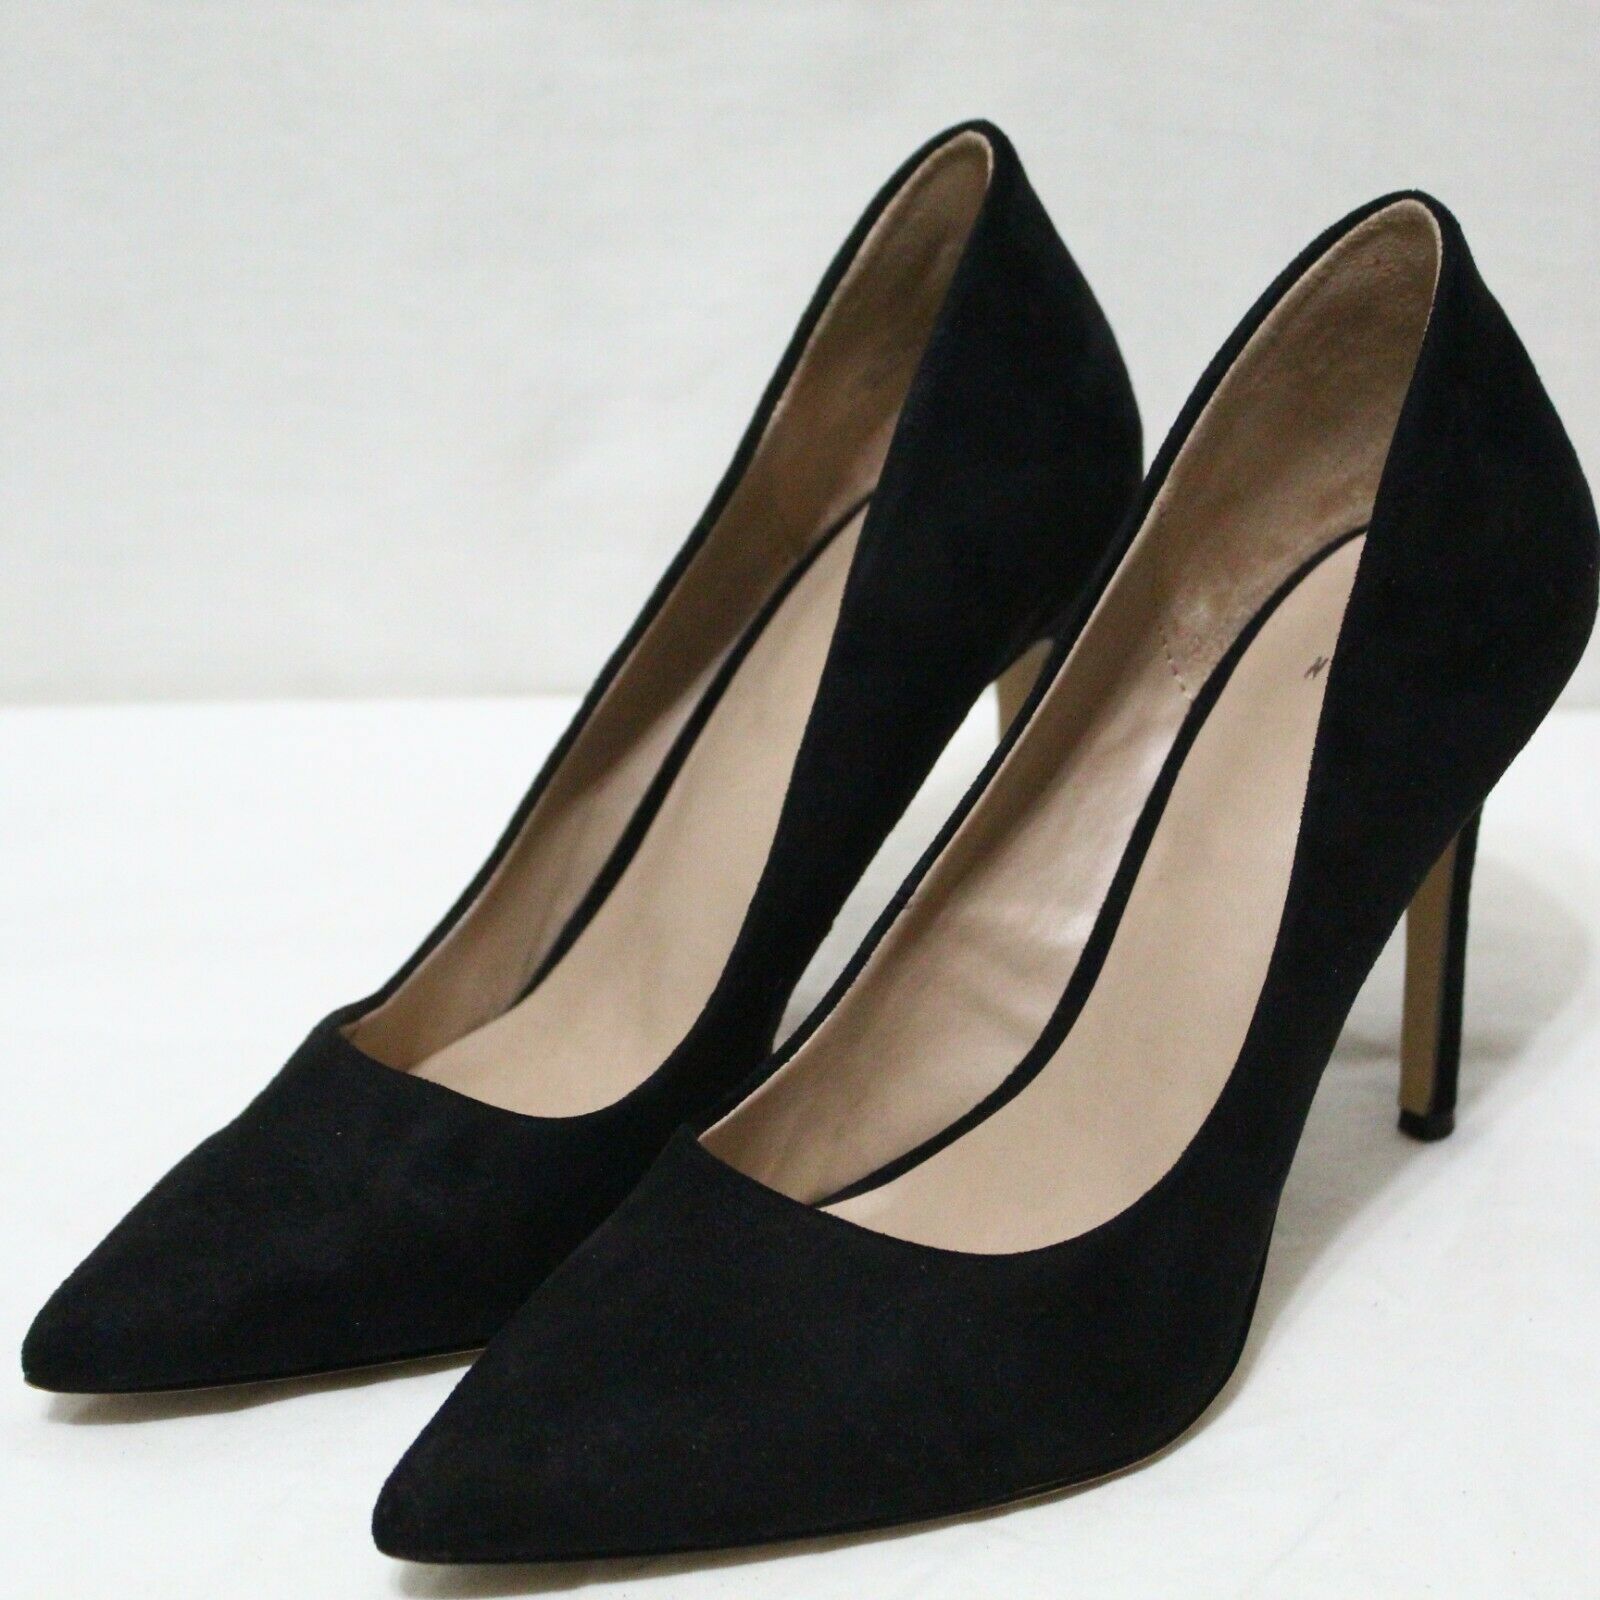 MIX NO.6 womens slip on high heel suede black dress pump shoes size 7.5 Medium